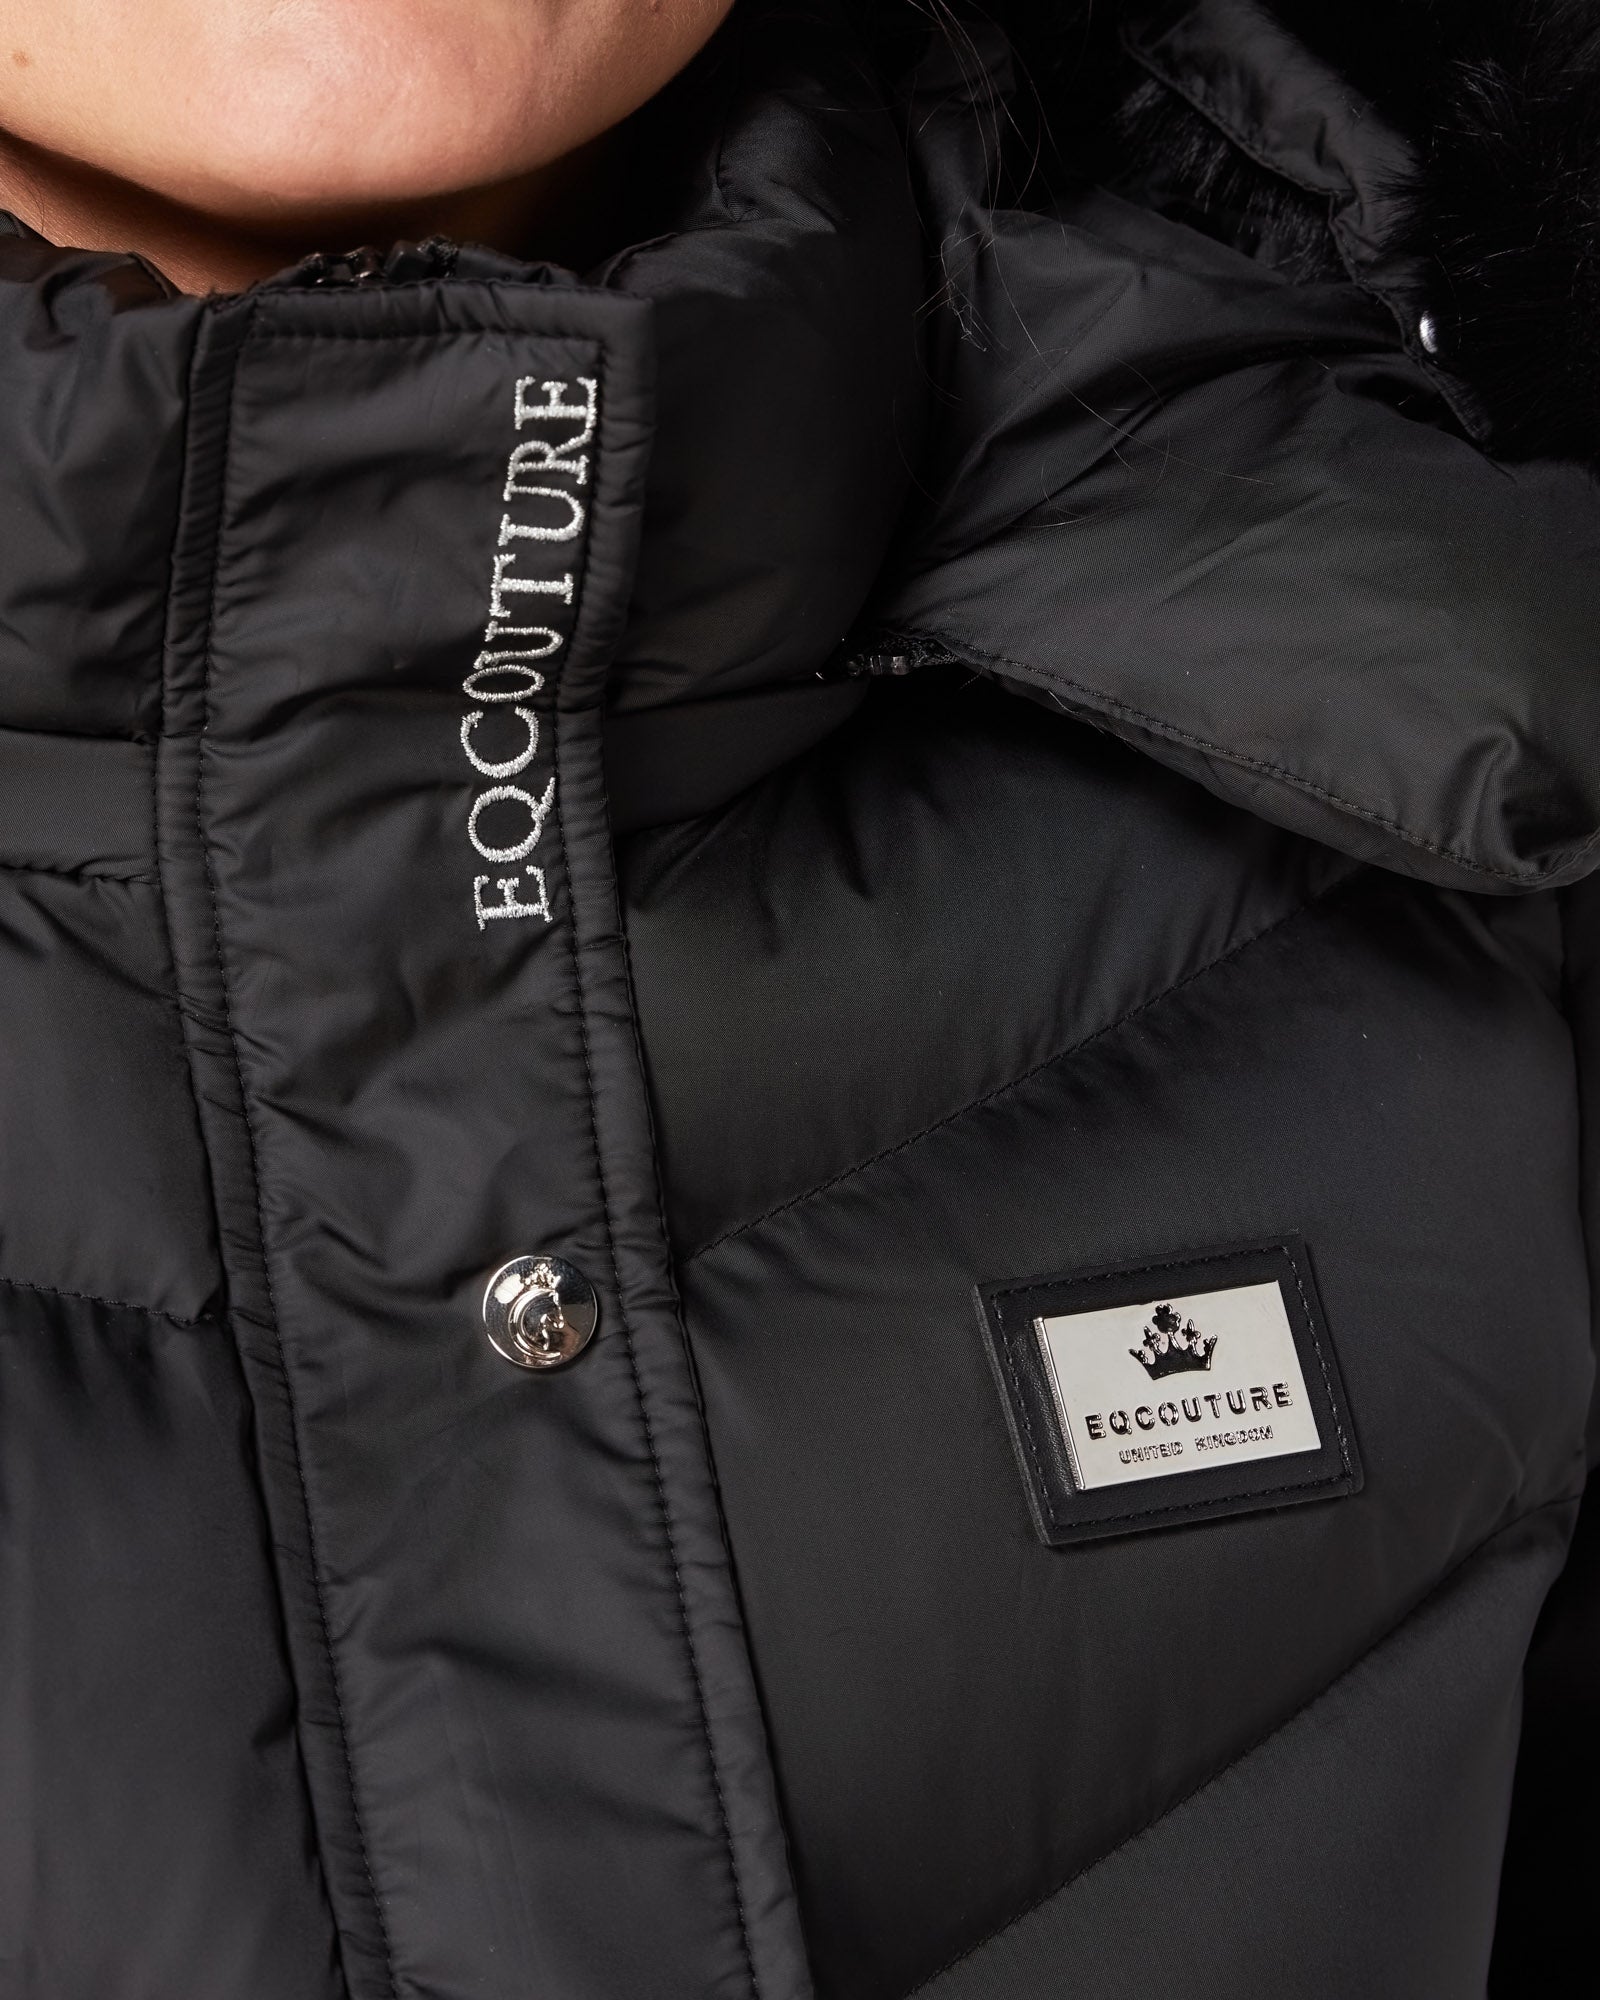 Exclusive Long Black Puffer Coat / Jacket 3.0 - Detachable Fur & Hood